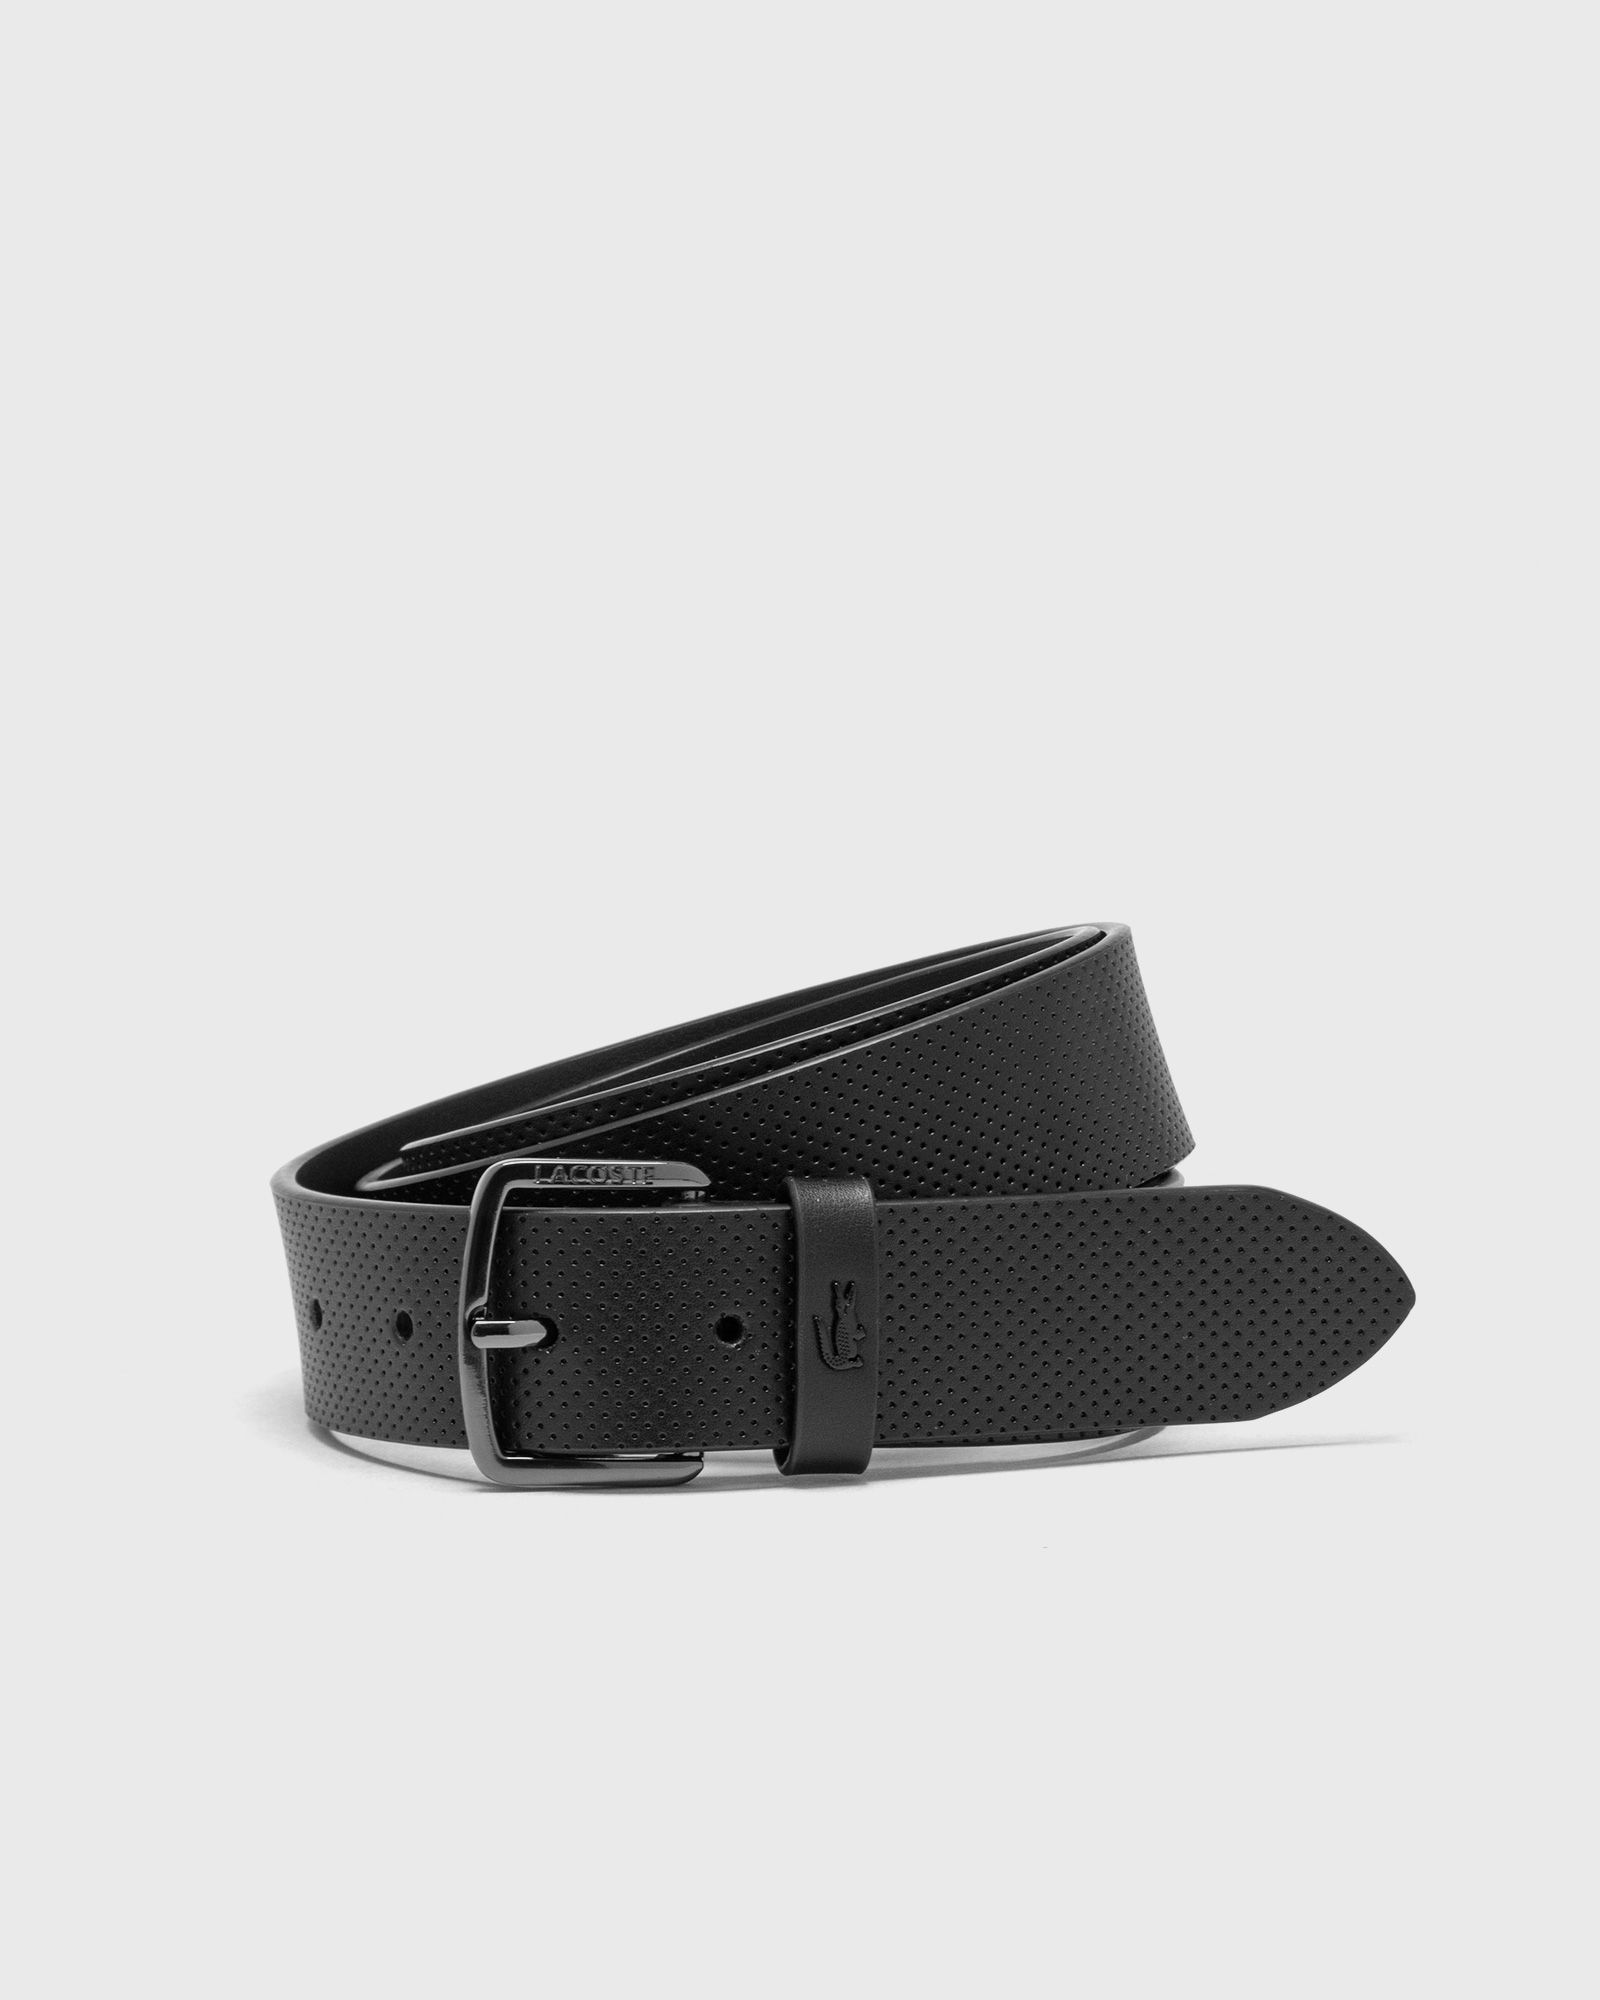 Lacoste - leather goods belt men wallets black in größe:95 cm